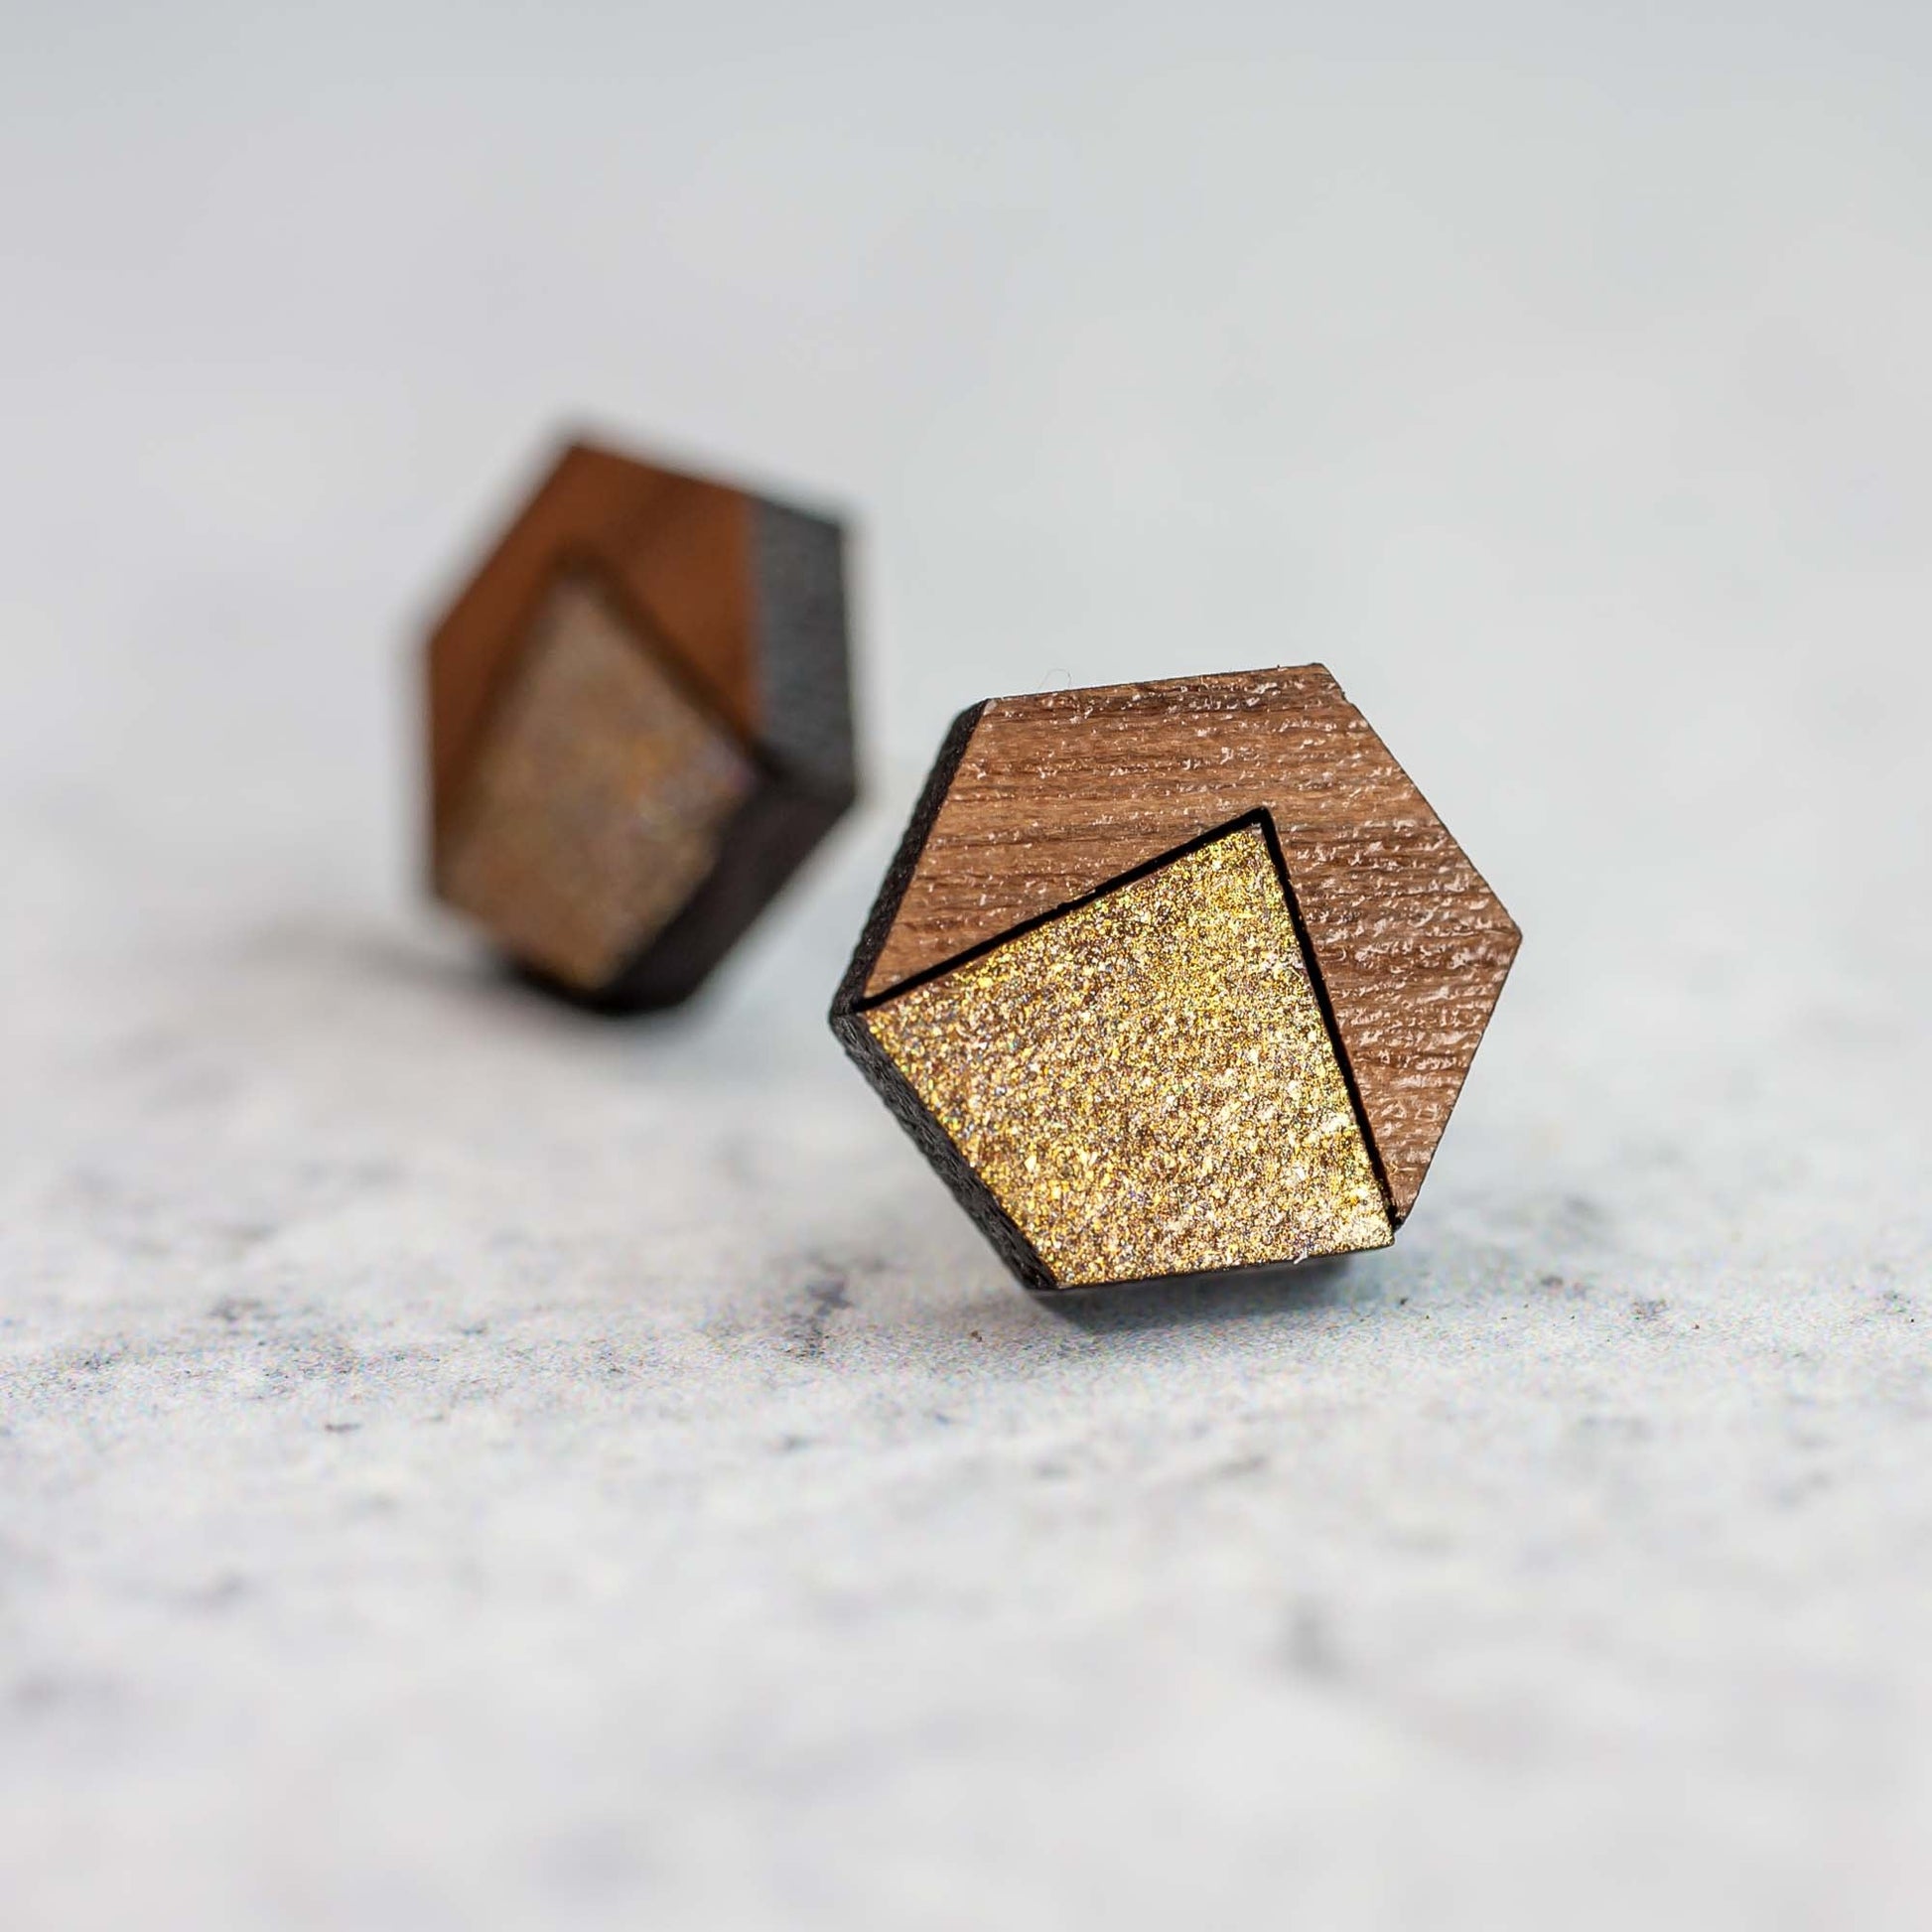 Wooden Laser Cut Earrings - Walnut with Gold Mountain Hexagon - by LeeMo Designs in Bend, Oregon